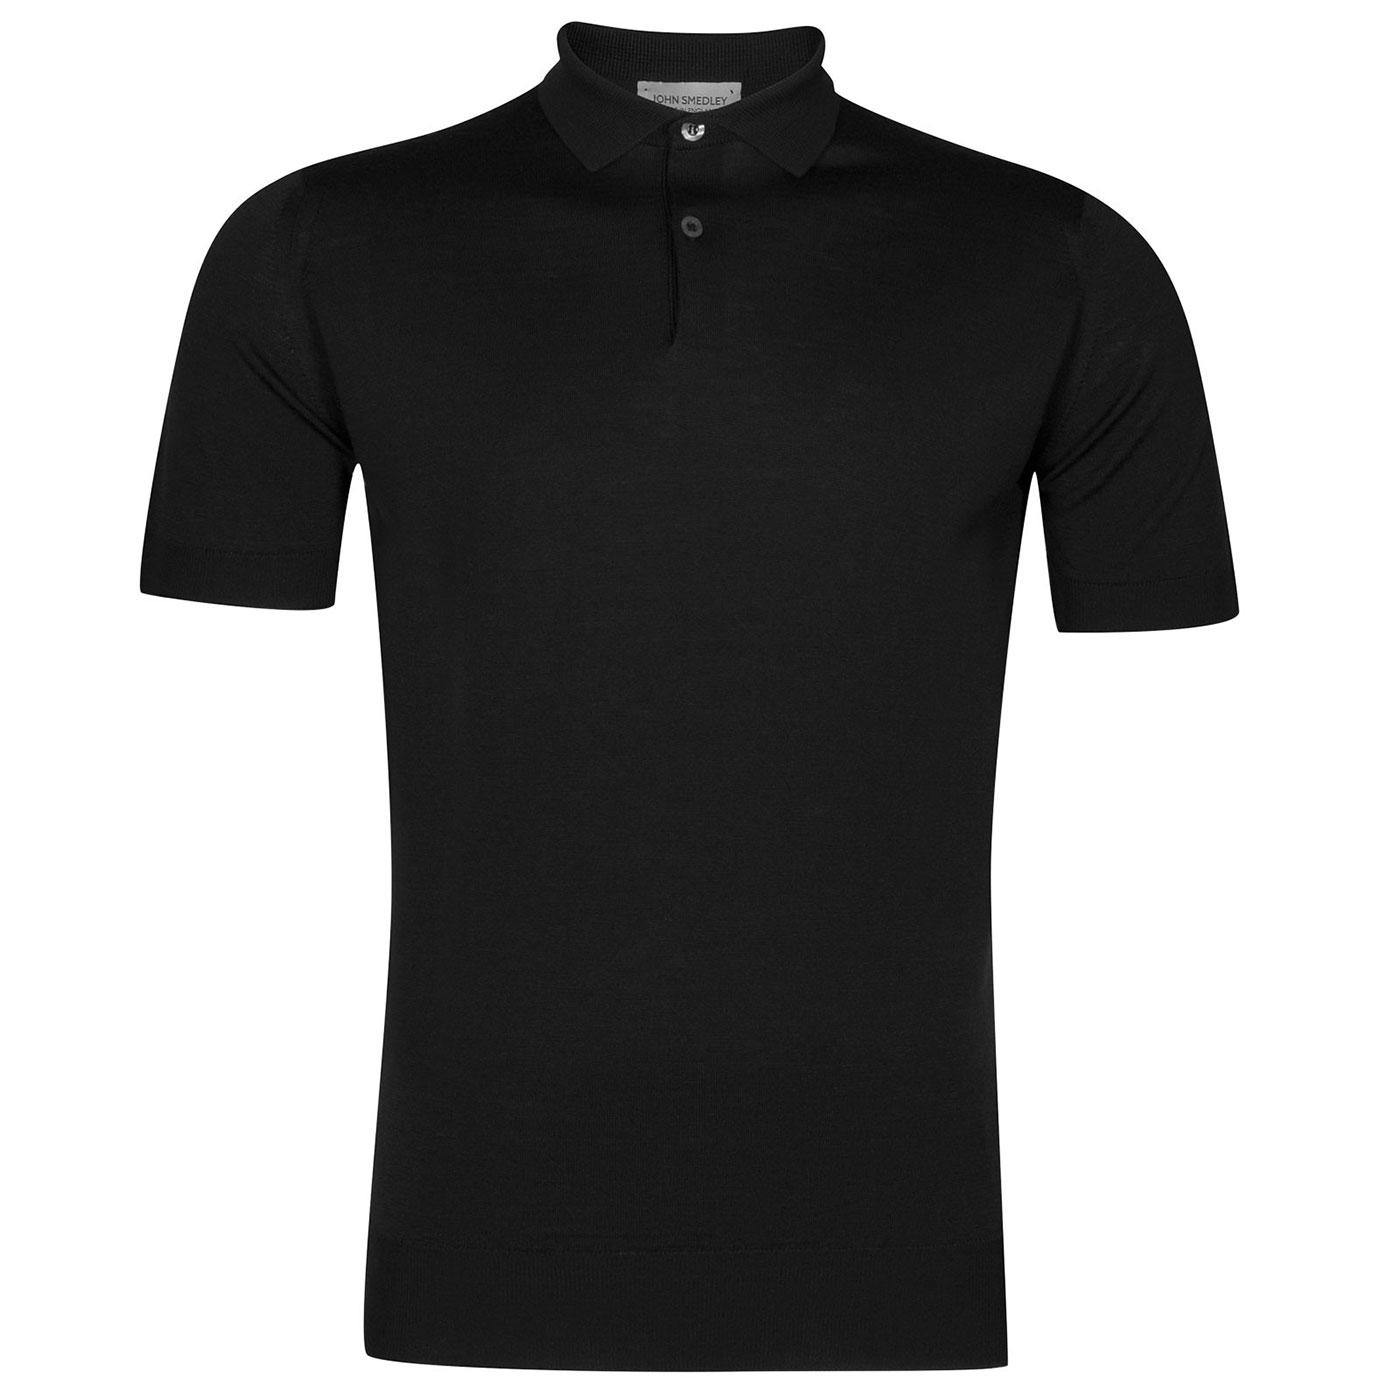 Payton JOHN SMEDLEY Knitted Merino Polo Shirt in Black